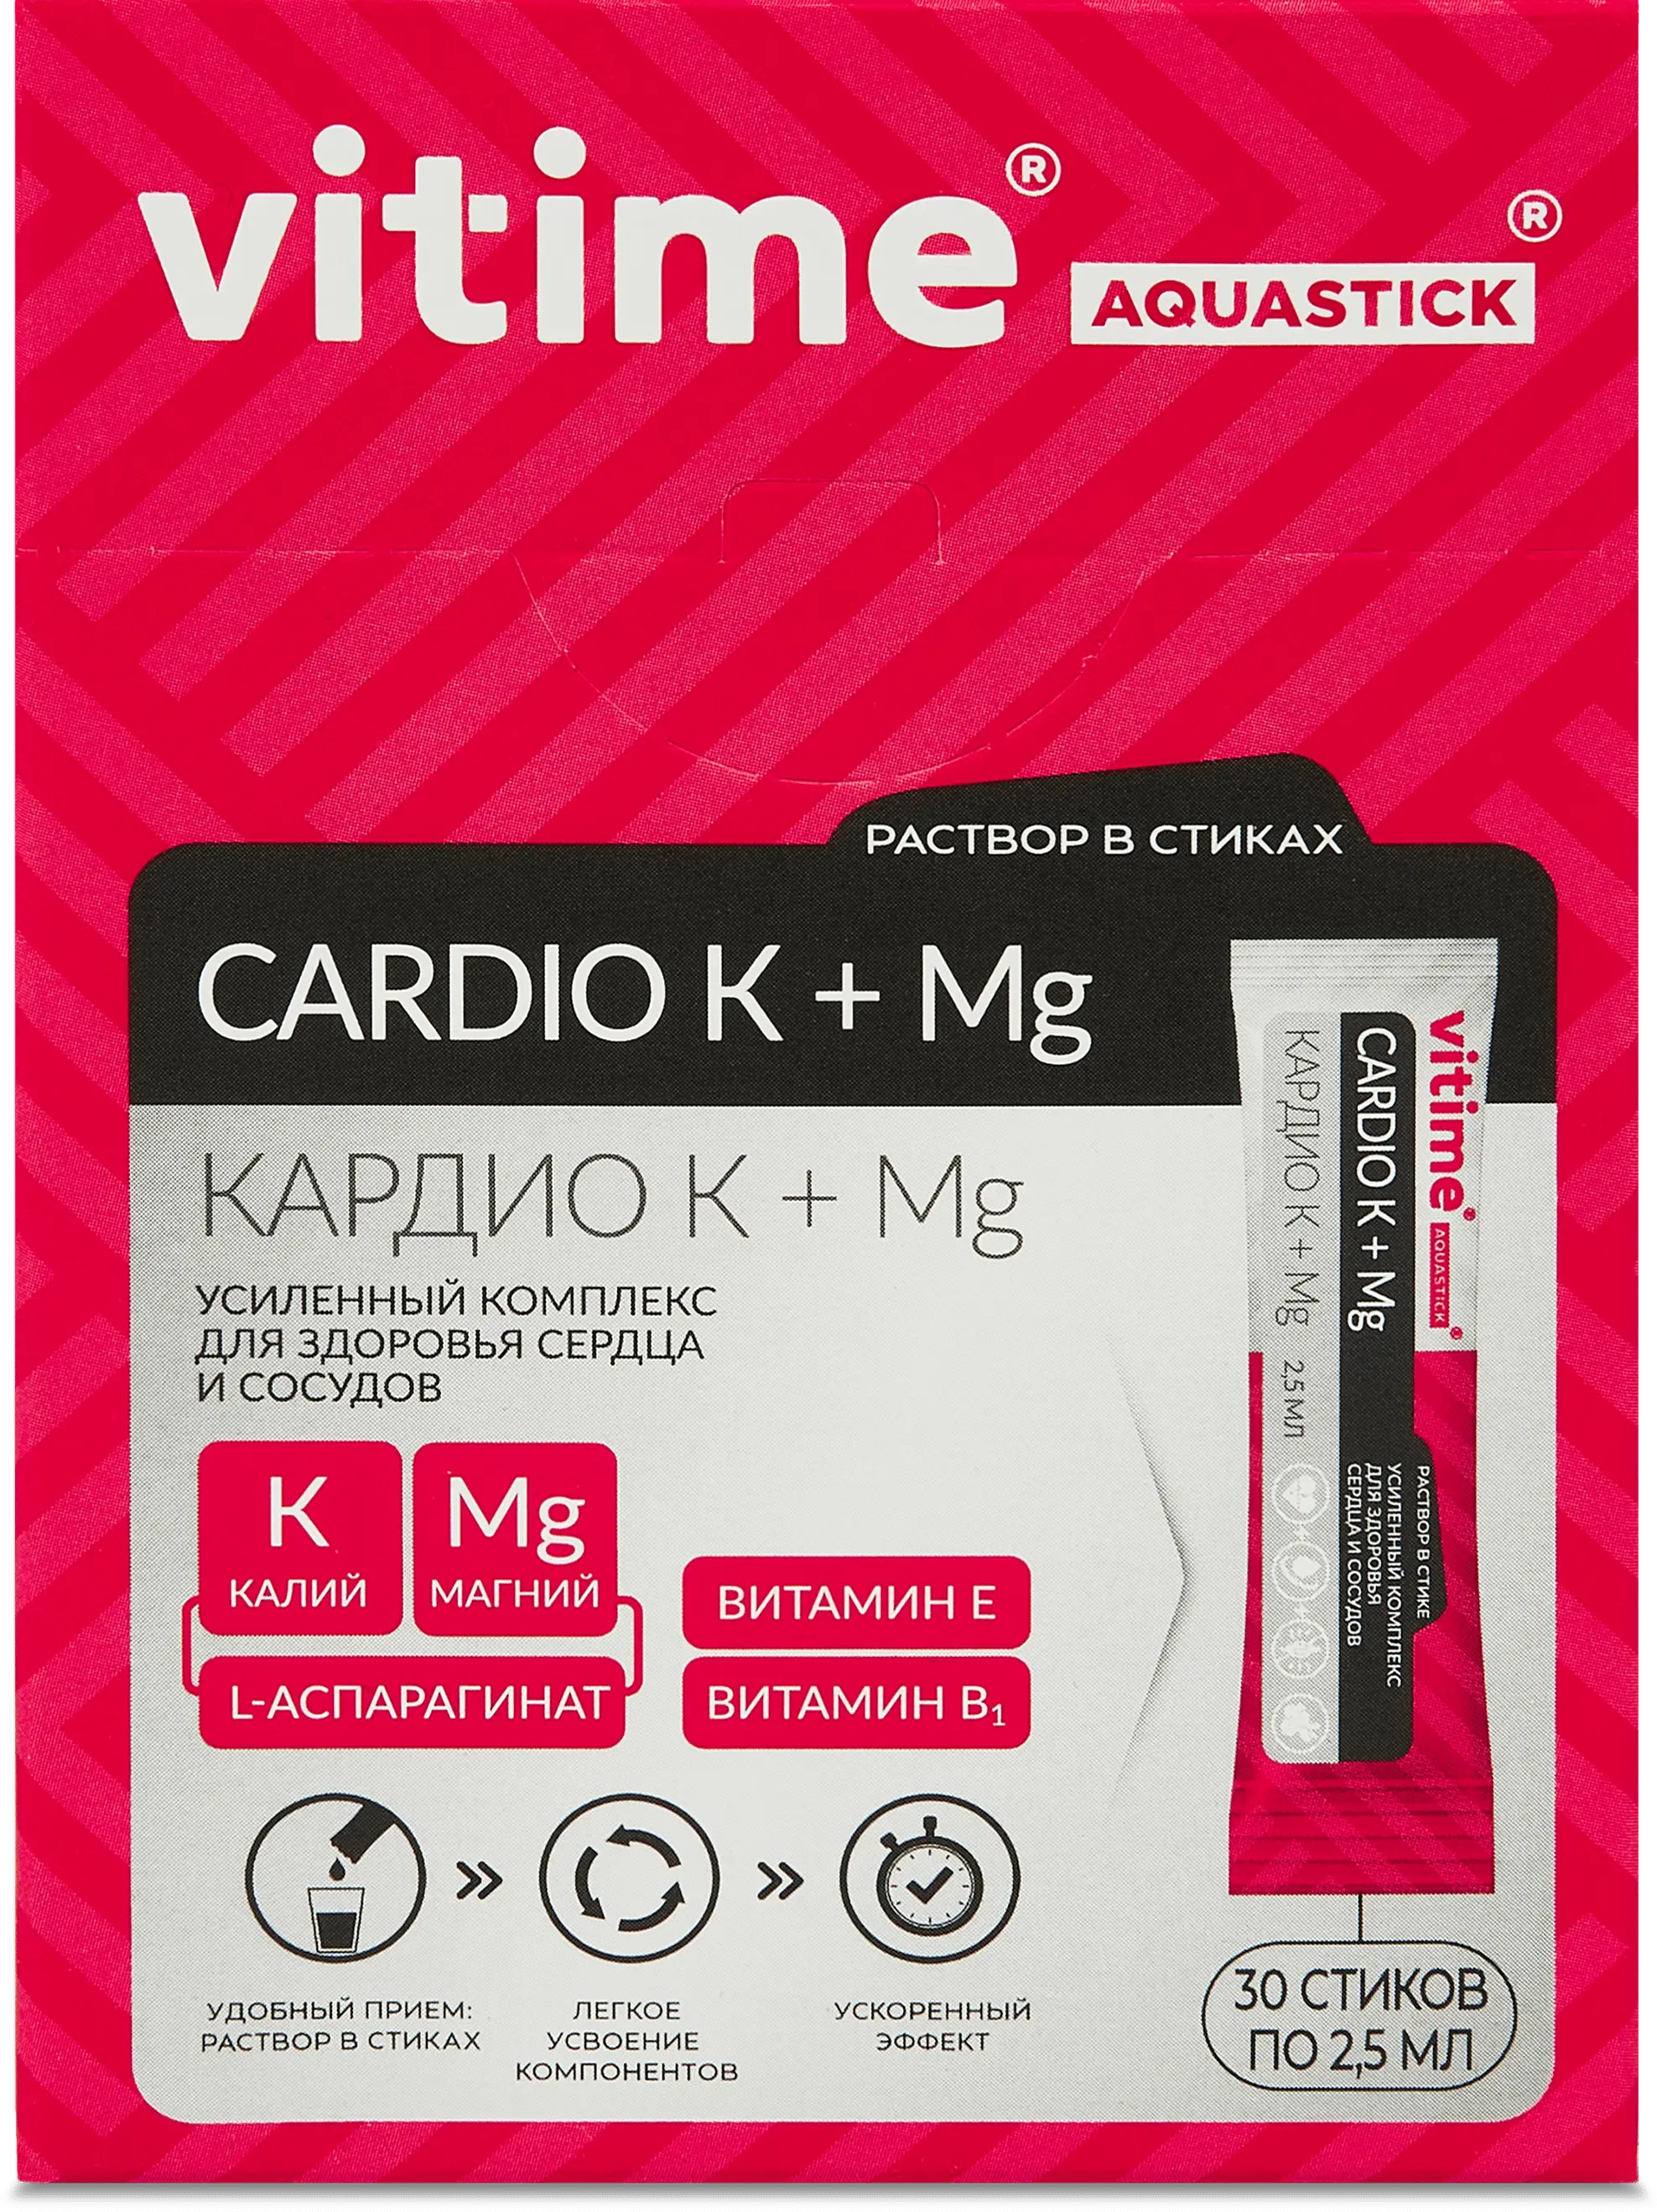 VITime® Aquastick® Cardio K + Mg